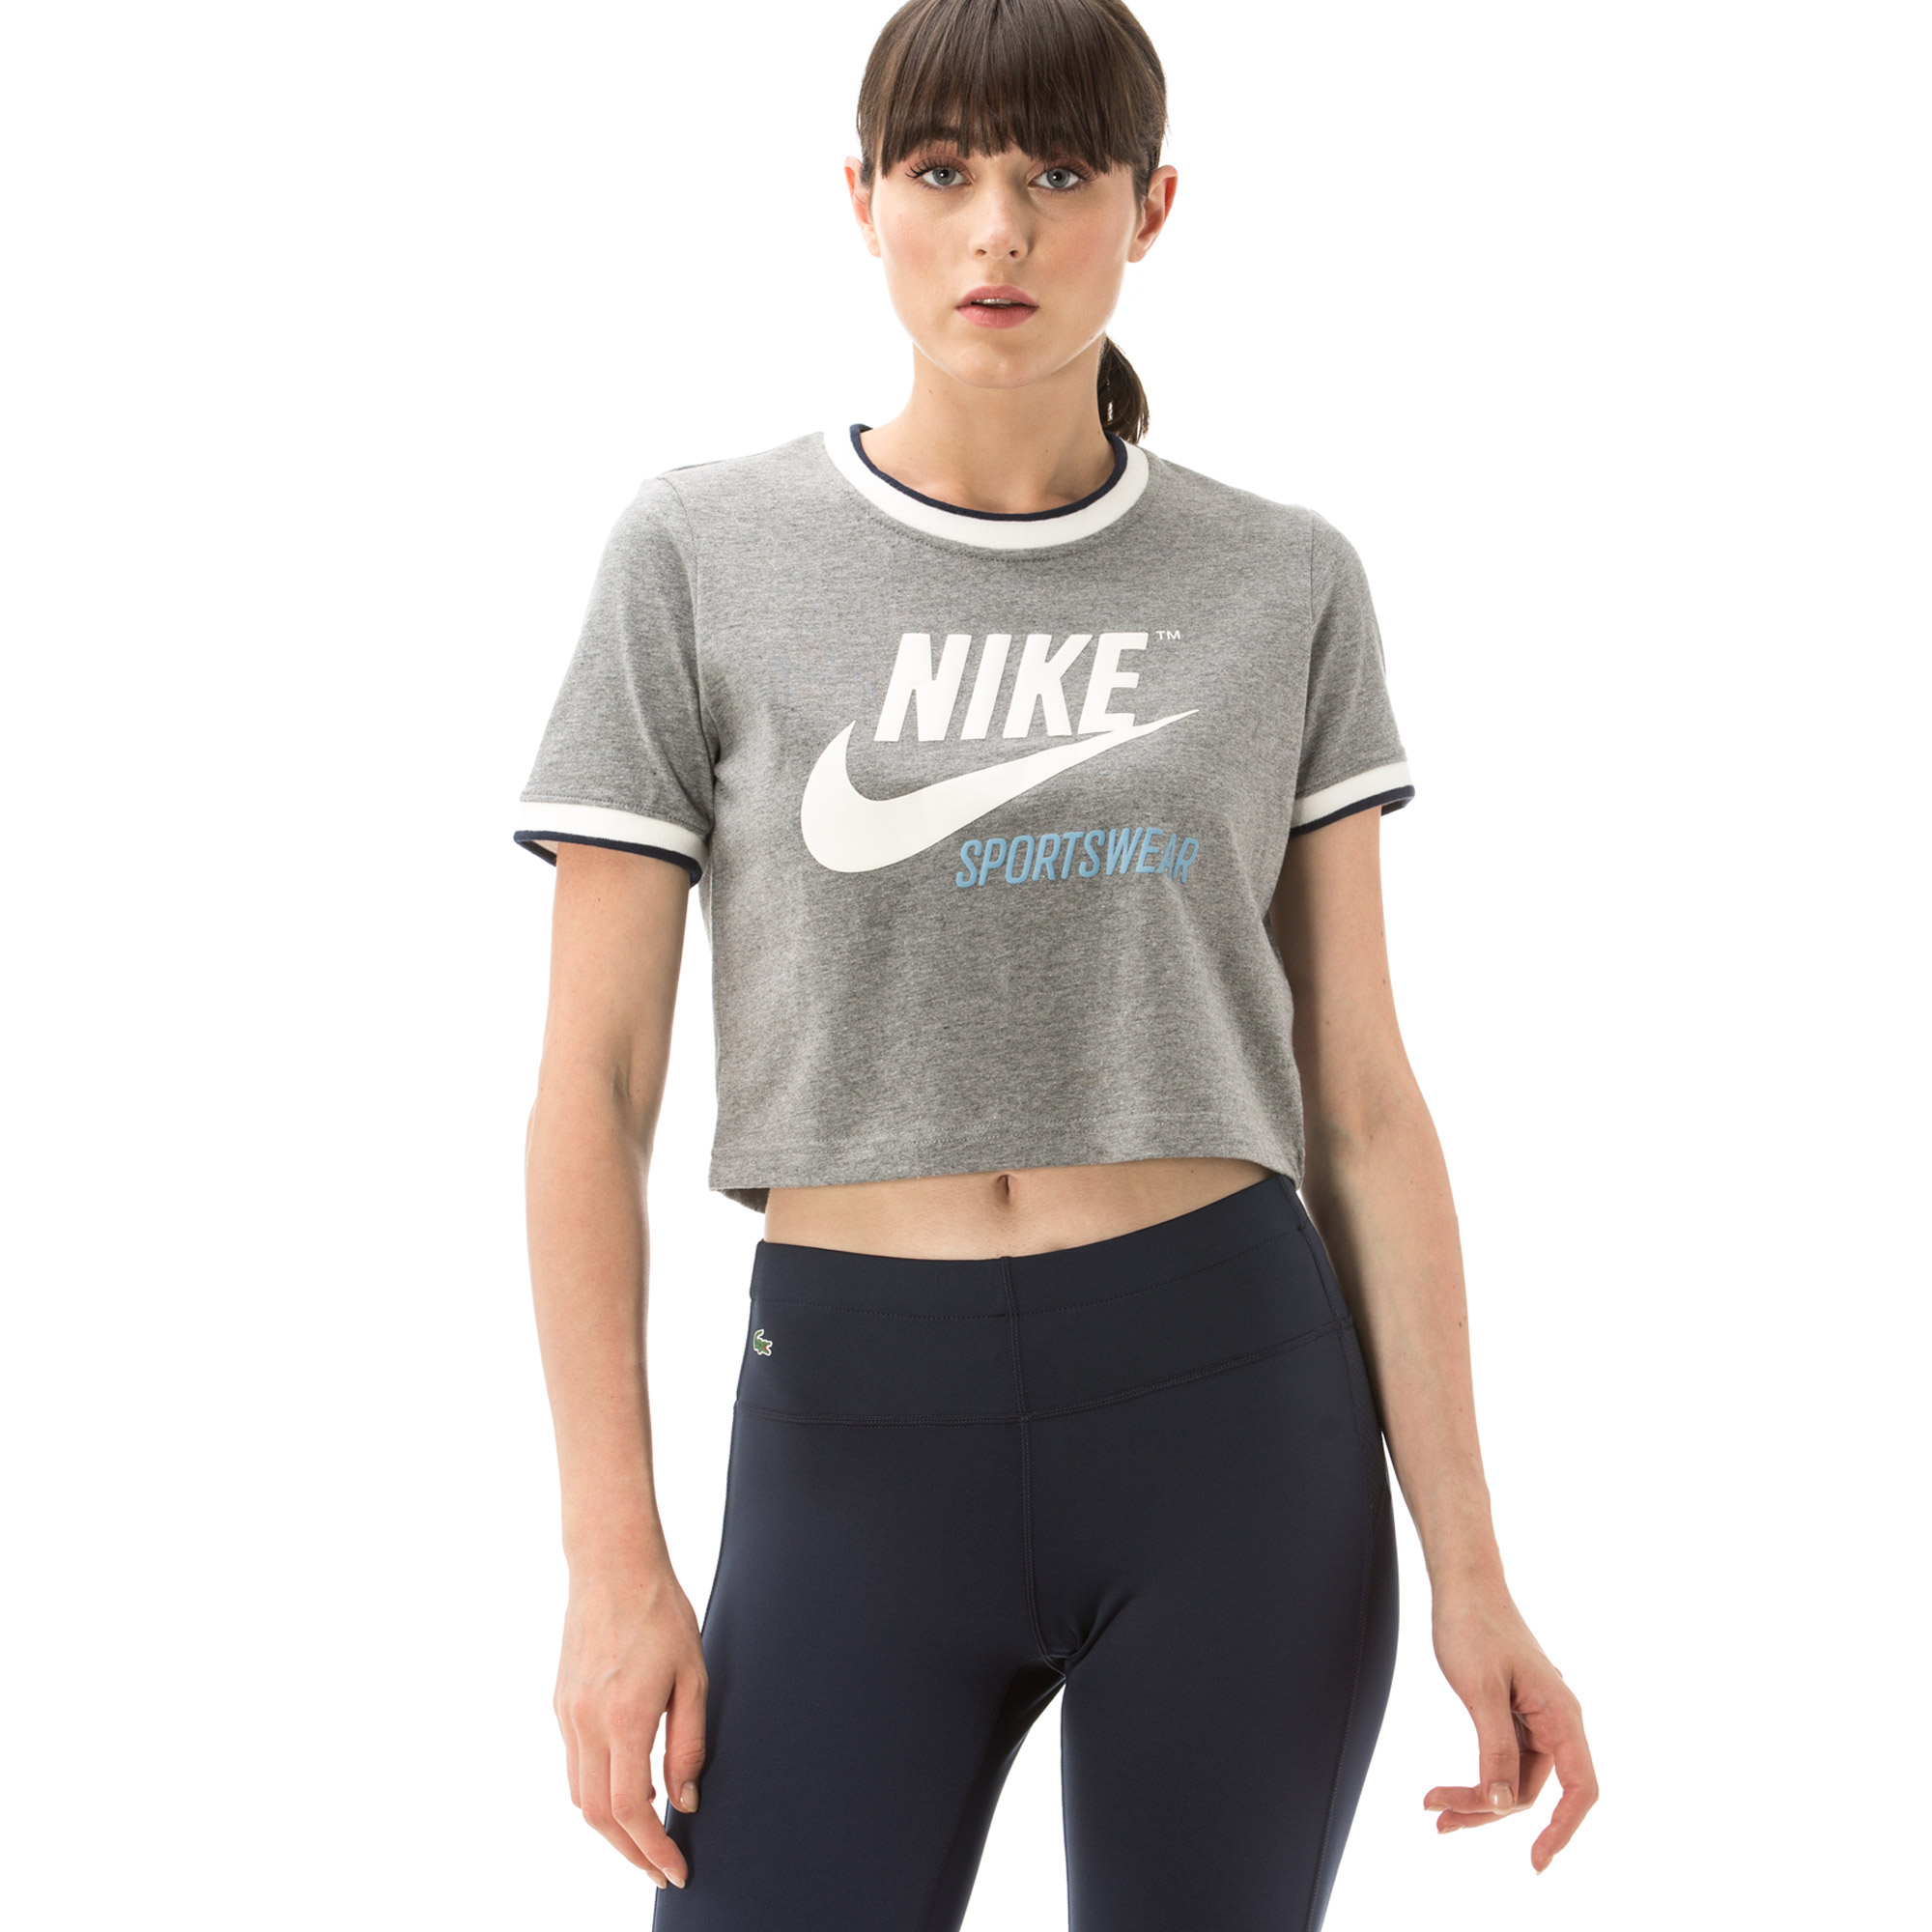 Nike Archive Kadin Gri Kisa Tisort Kadin T Shirt 3168780 Superstep